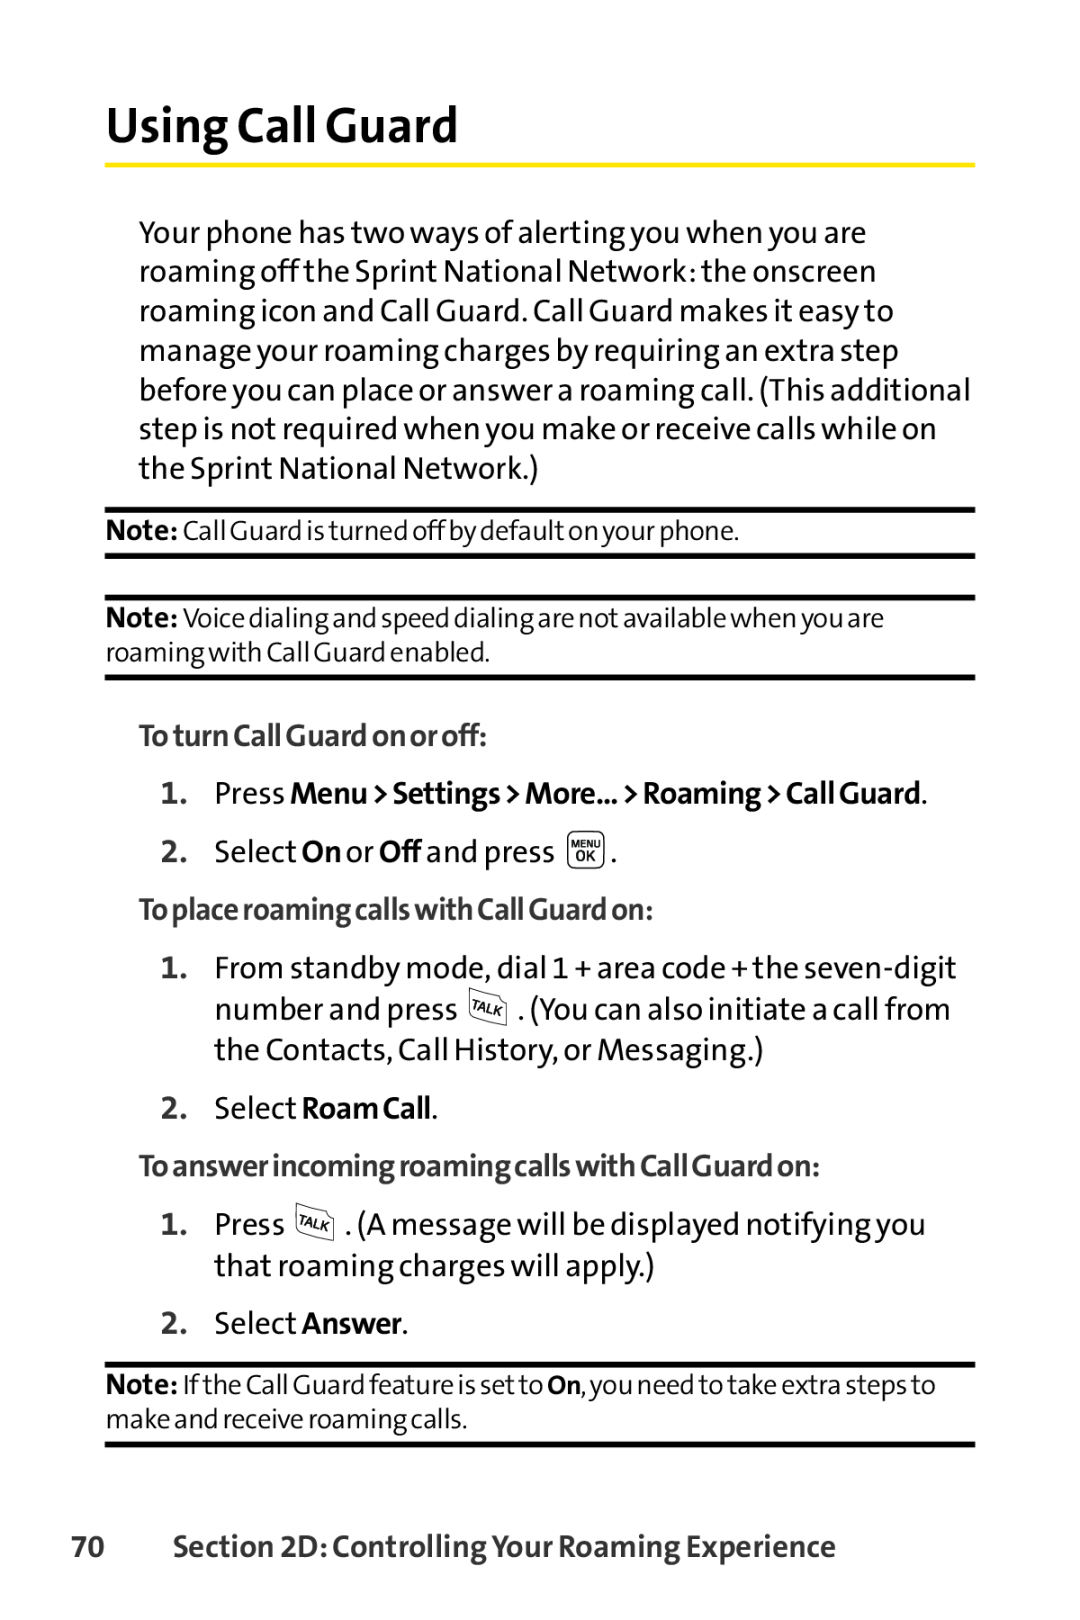 Sprint Nextel LX160 manual Using Call Guard, ToturnCallGuardonoroff, Press MenuSettingsMore...RoamingCallGuard 